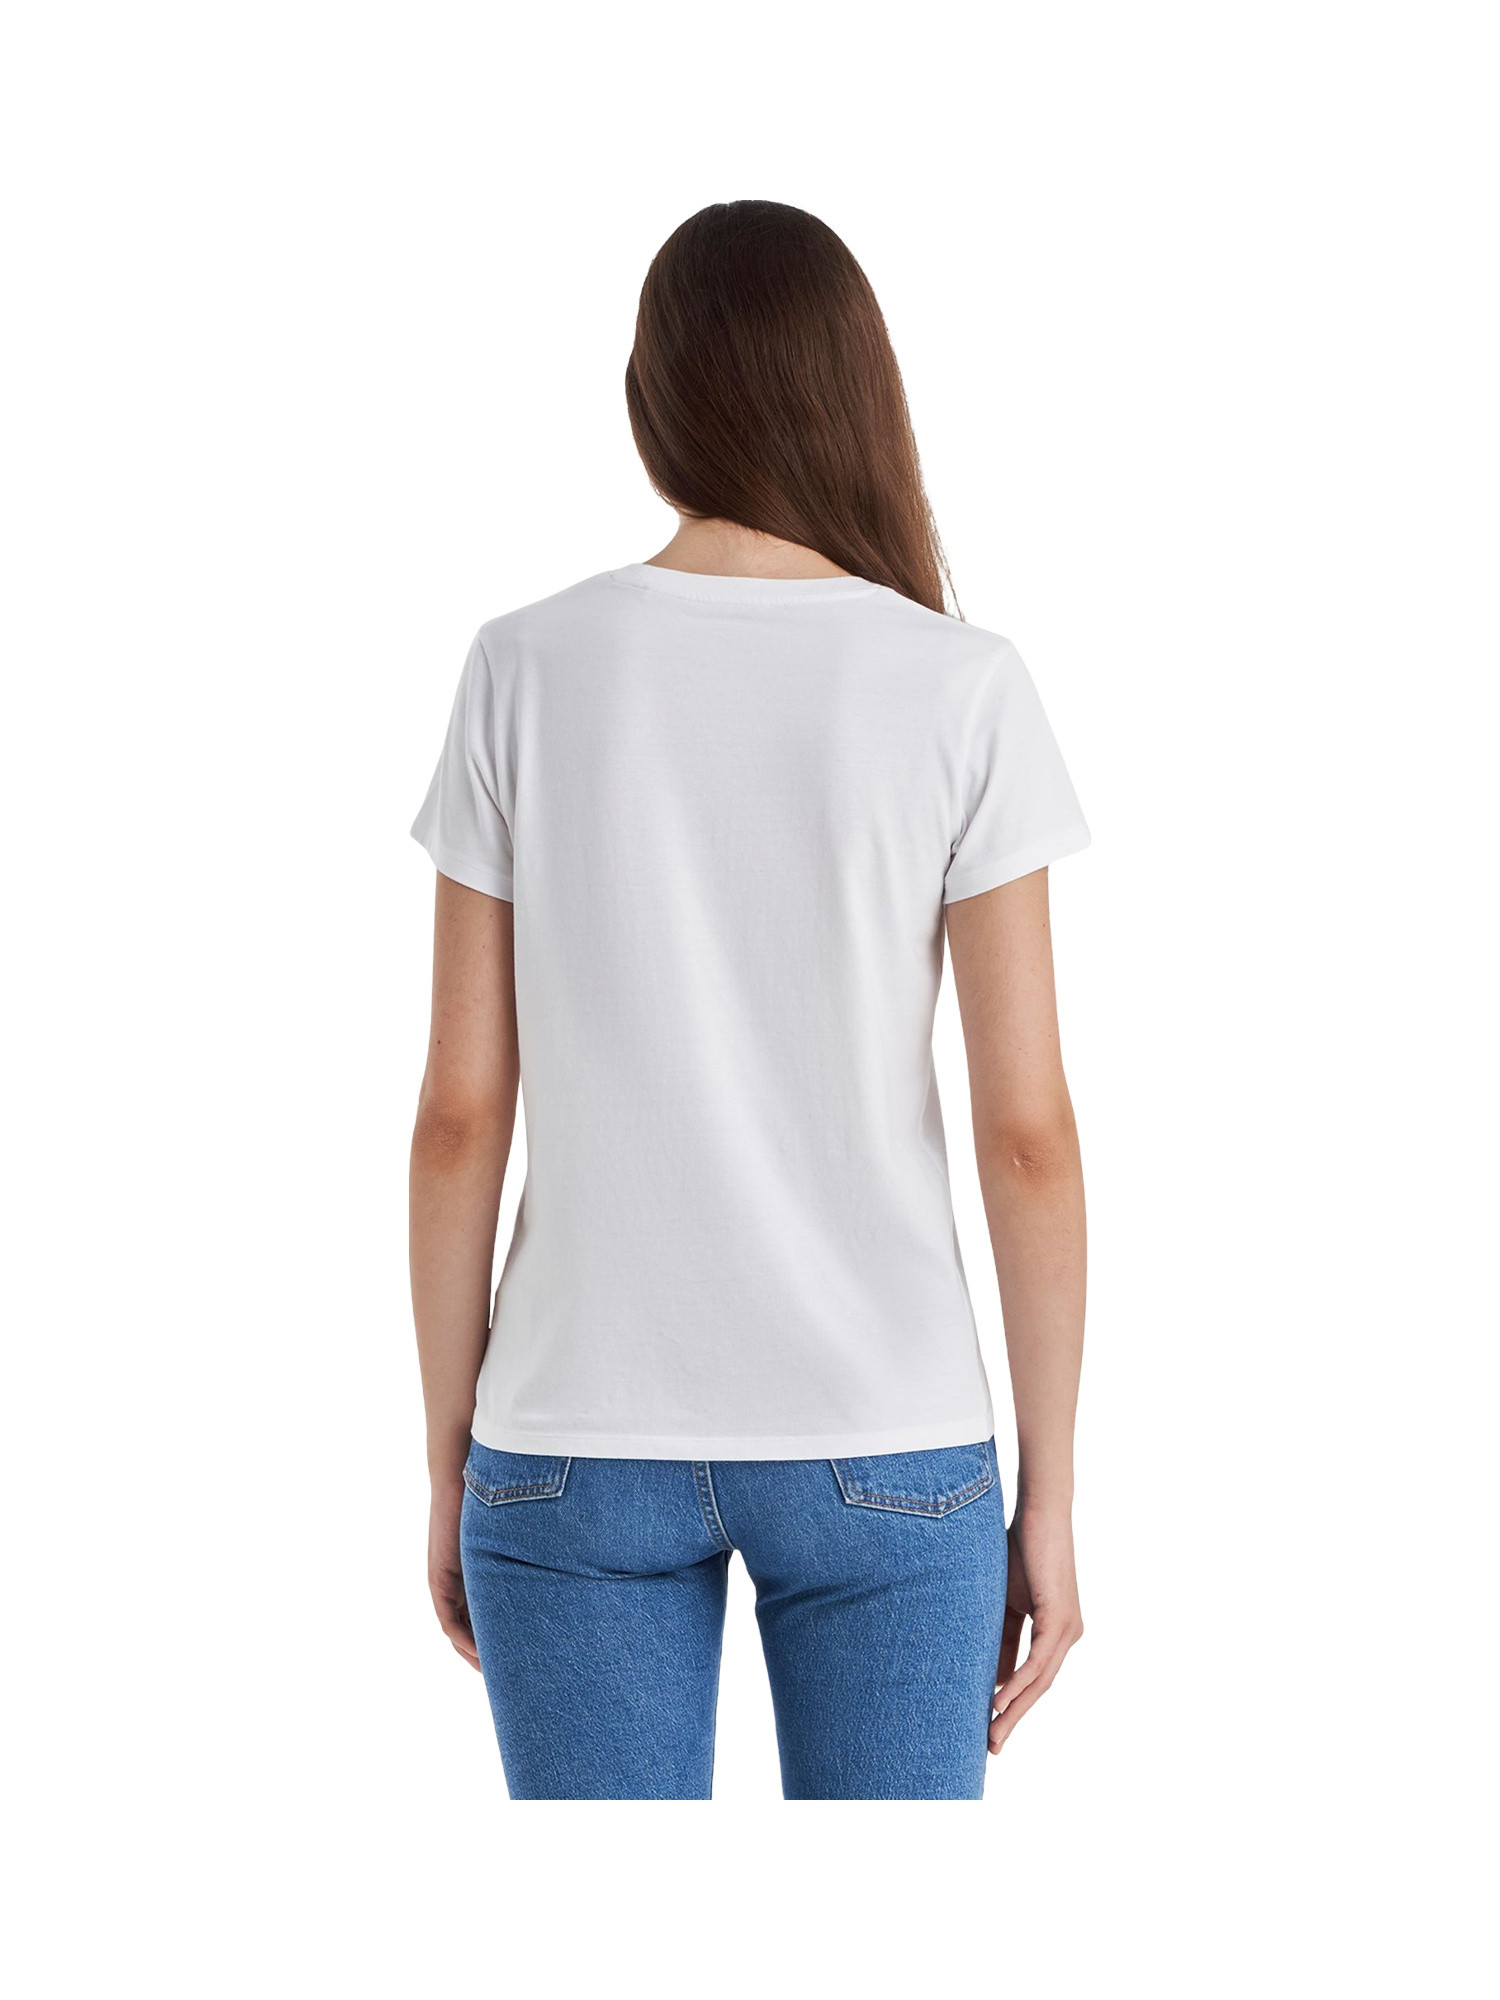 Levi's - Floral Logo T-Shirt, White, large image number 3